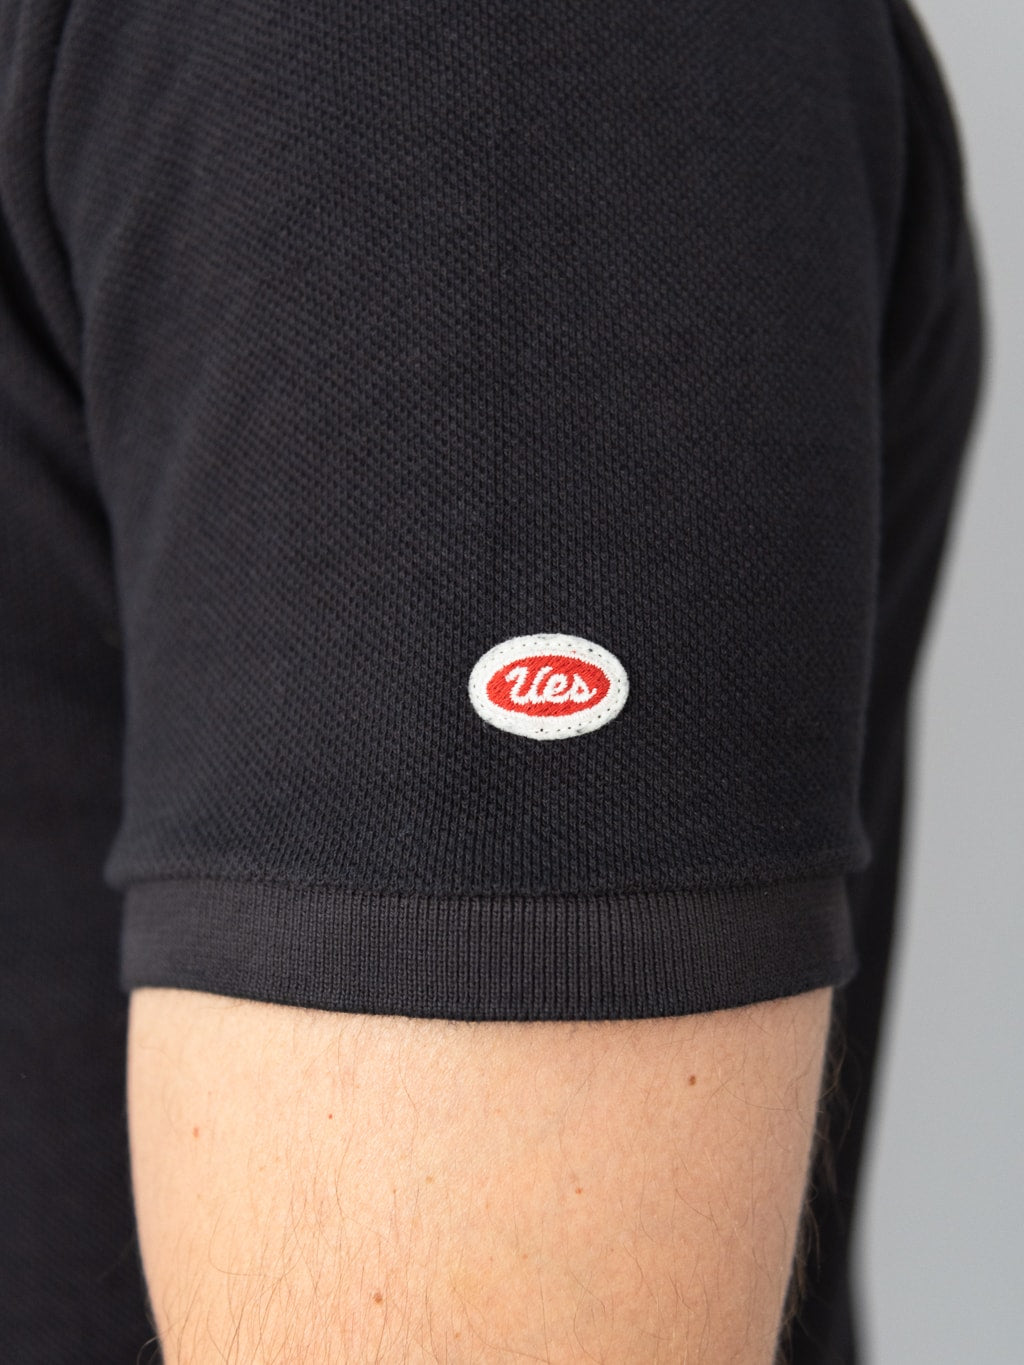 ues polo shirt black short sleeve logo patch